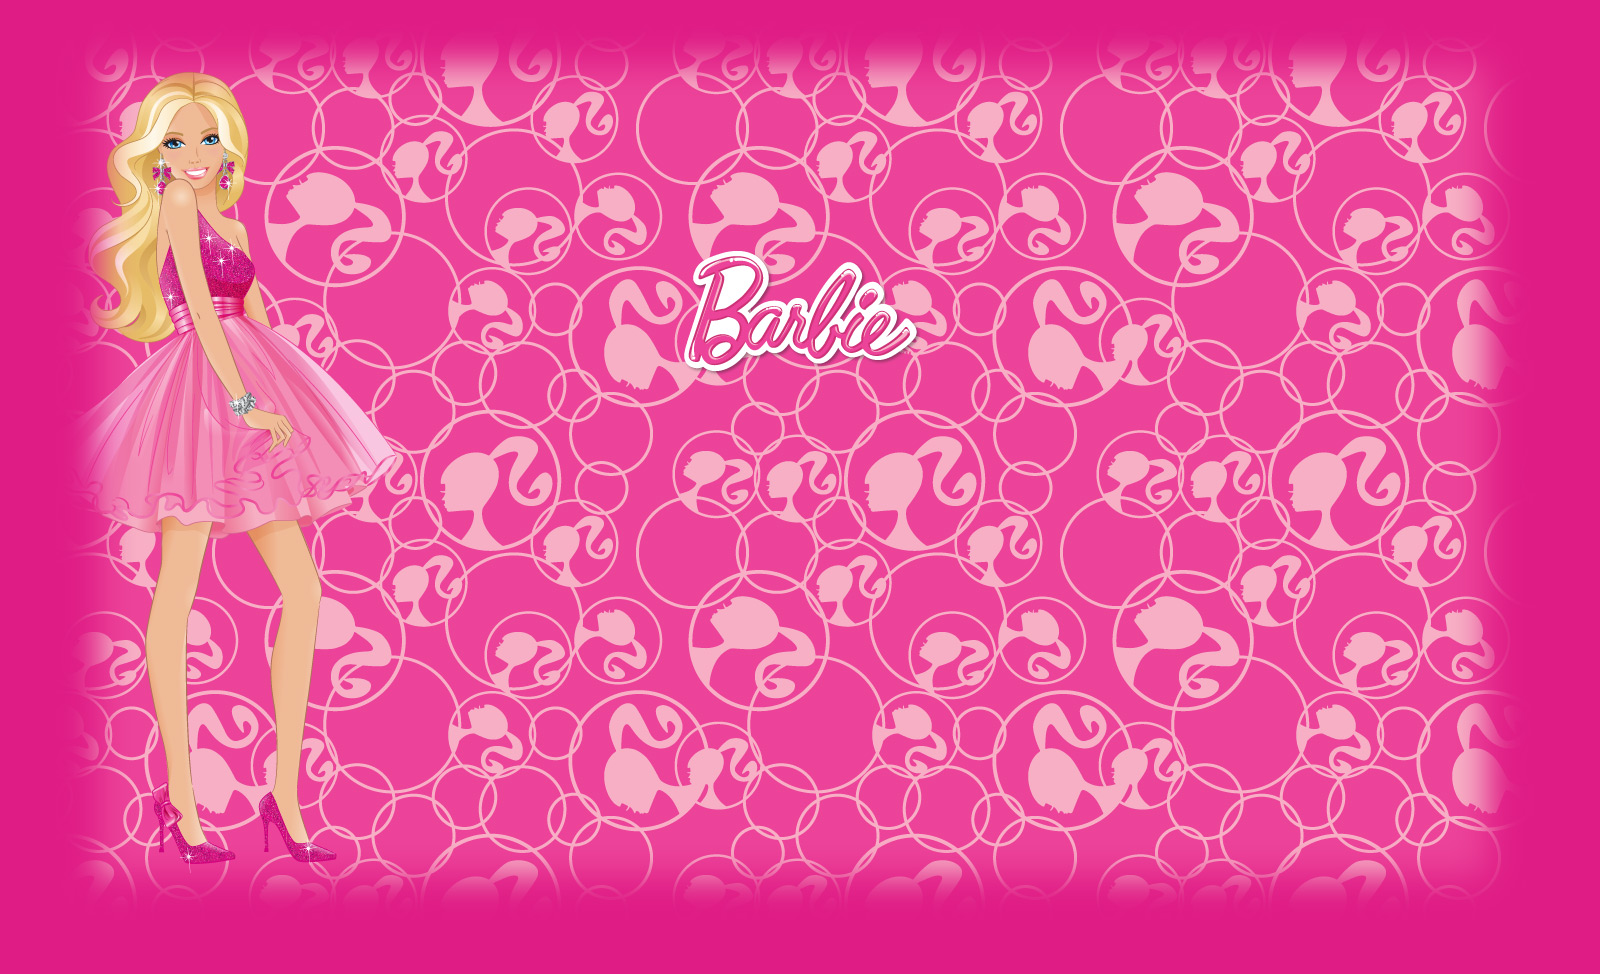 PVC Little Girls pink barbie kids wallpaper For Little girls bedroom  Size 57 Sq Ft